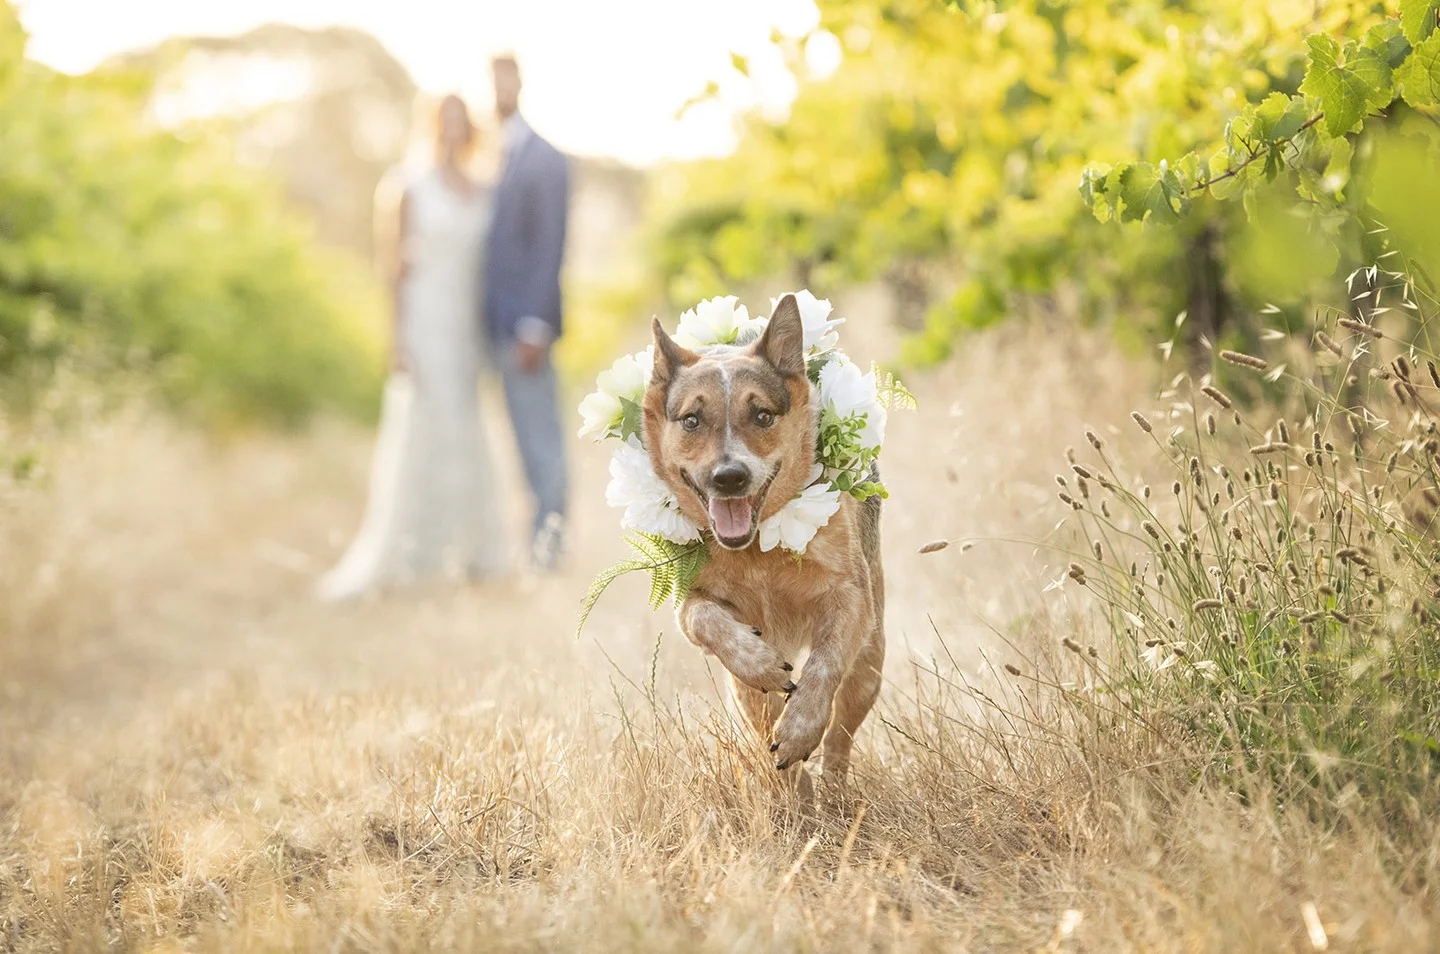 Wedding-pet-ideas-pet-on-honeymoon-photo-Svenstudios